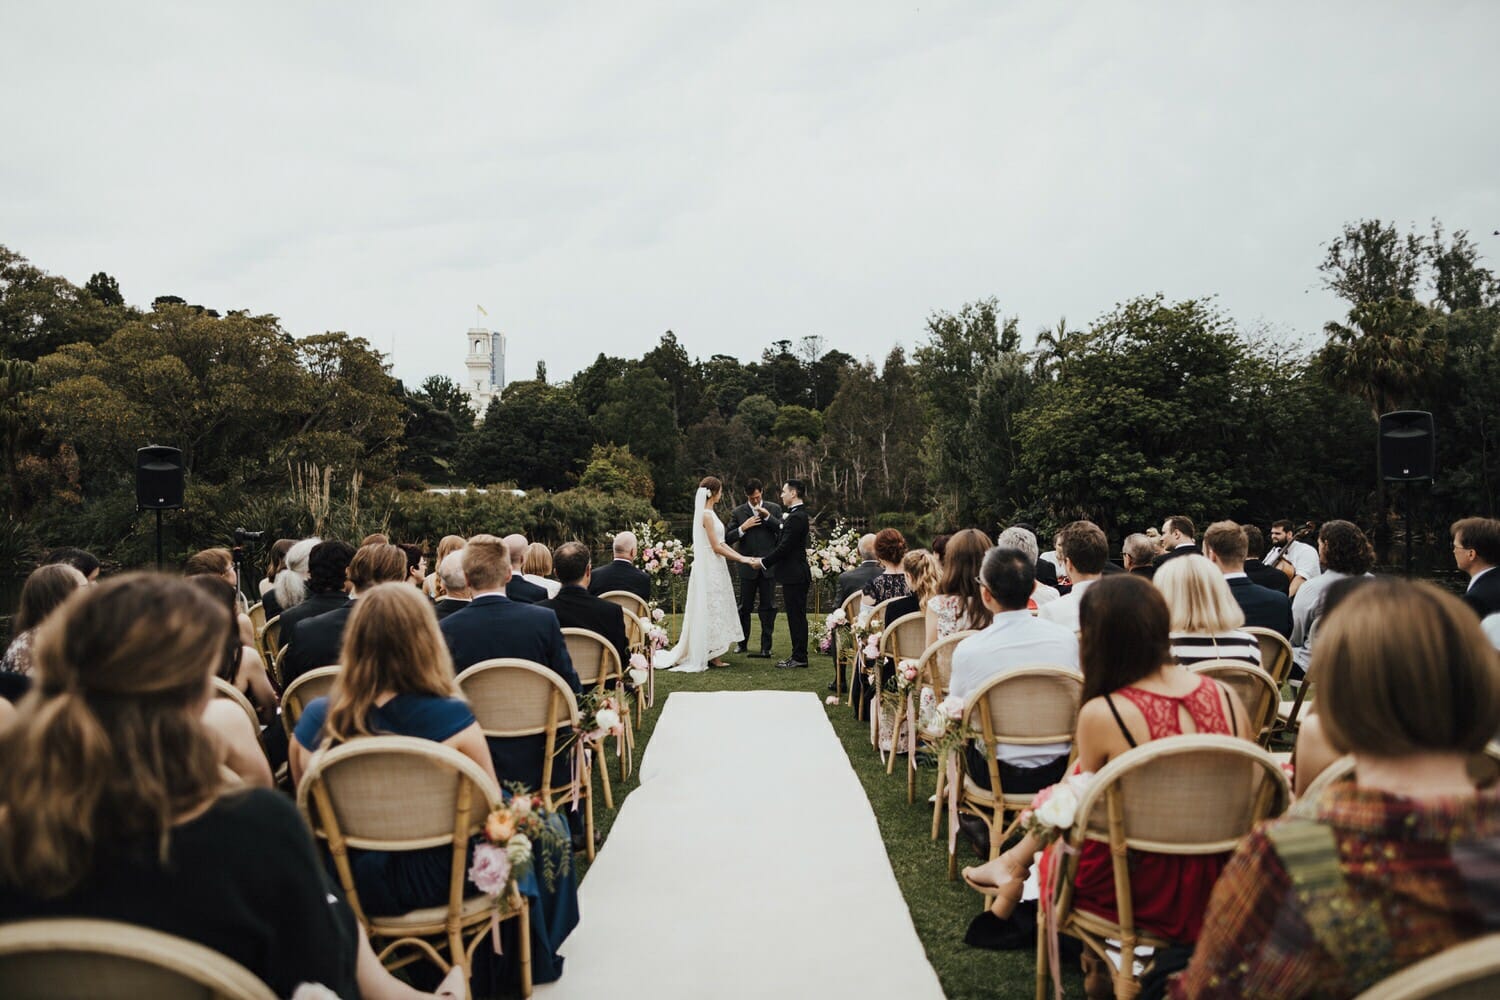 Intimate Garden Ceremony Royal Botanic Gardens Melbourne Wedding Photographer